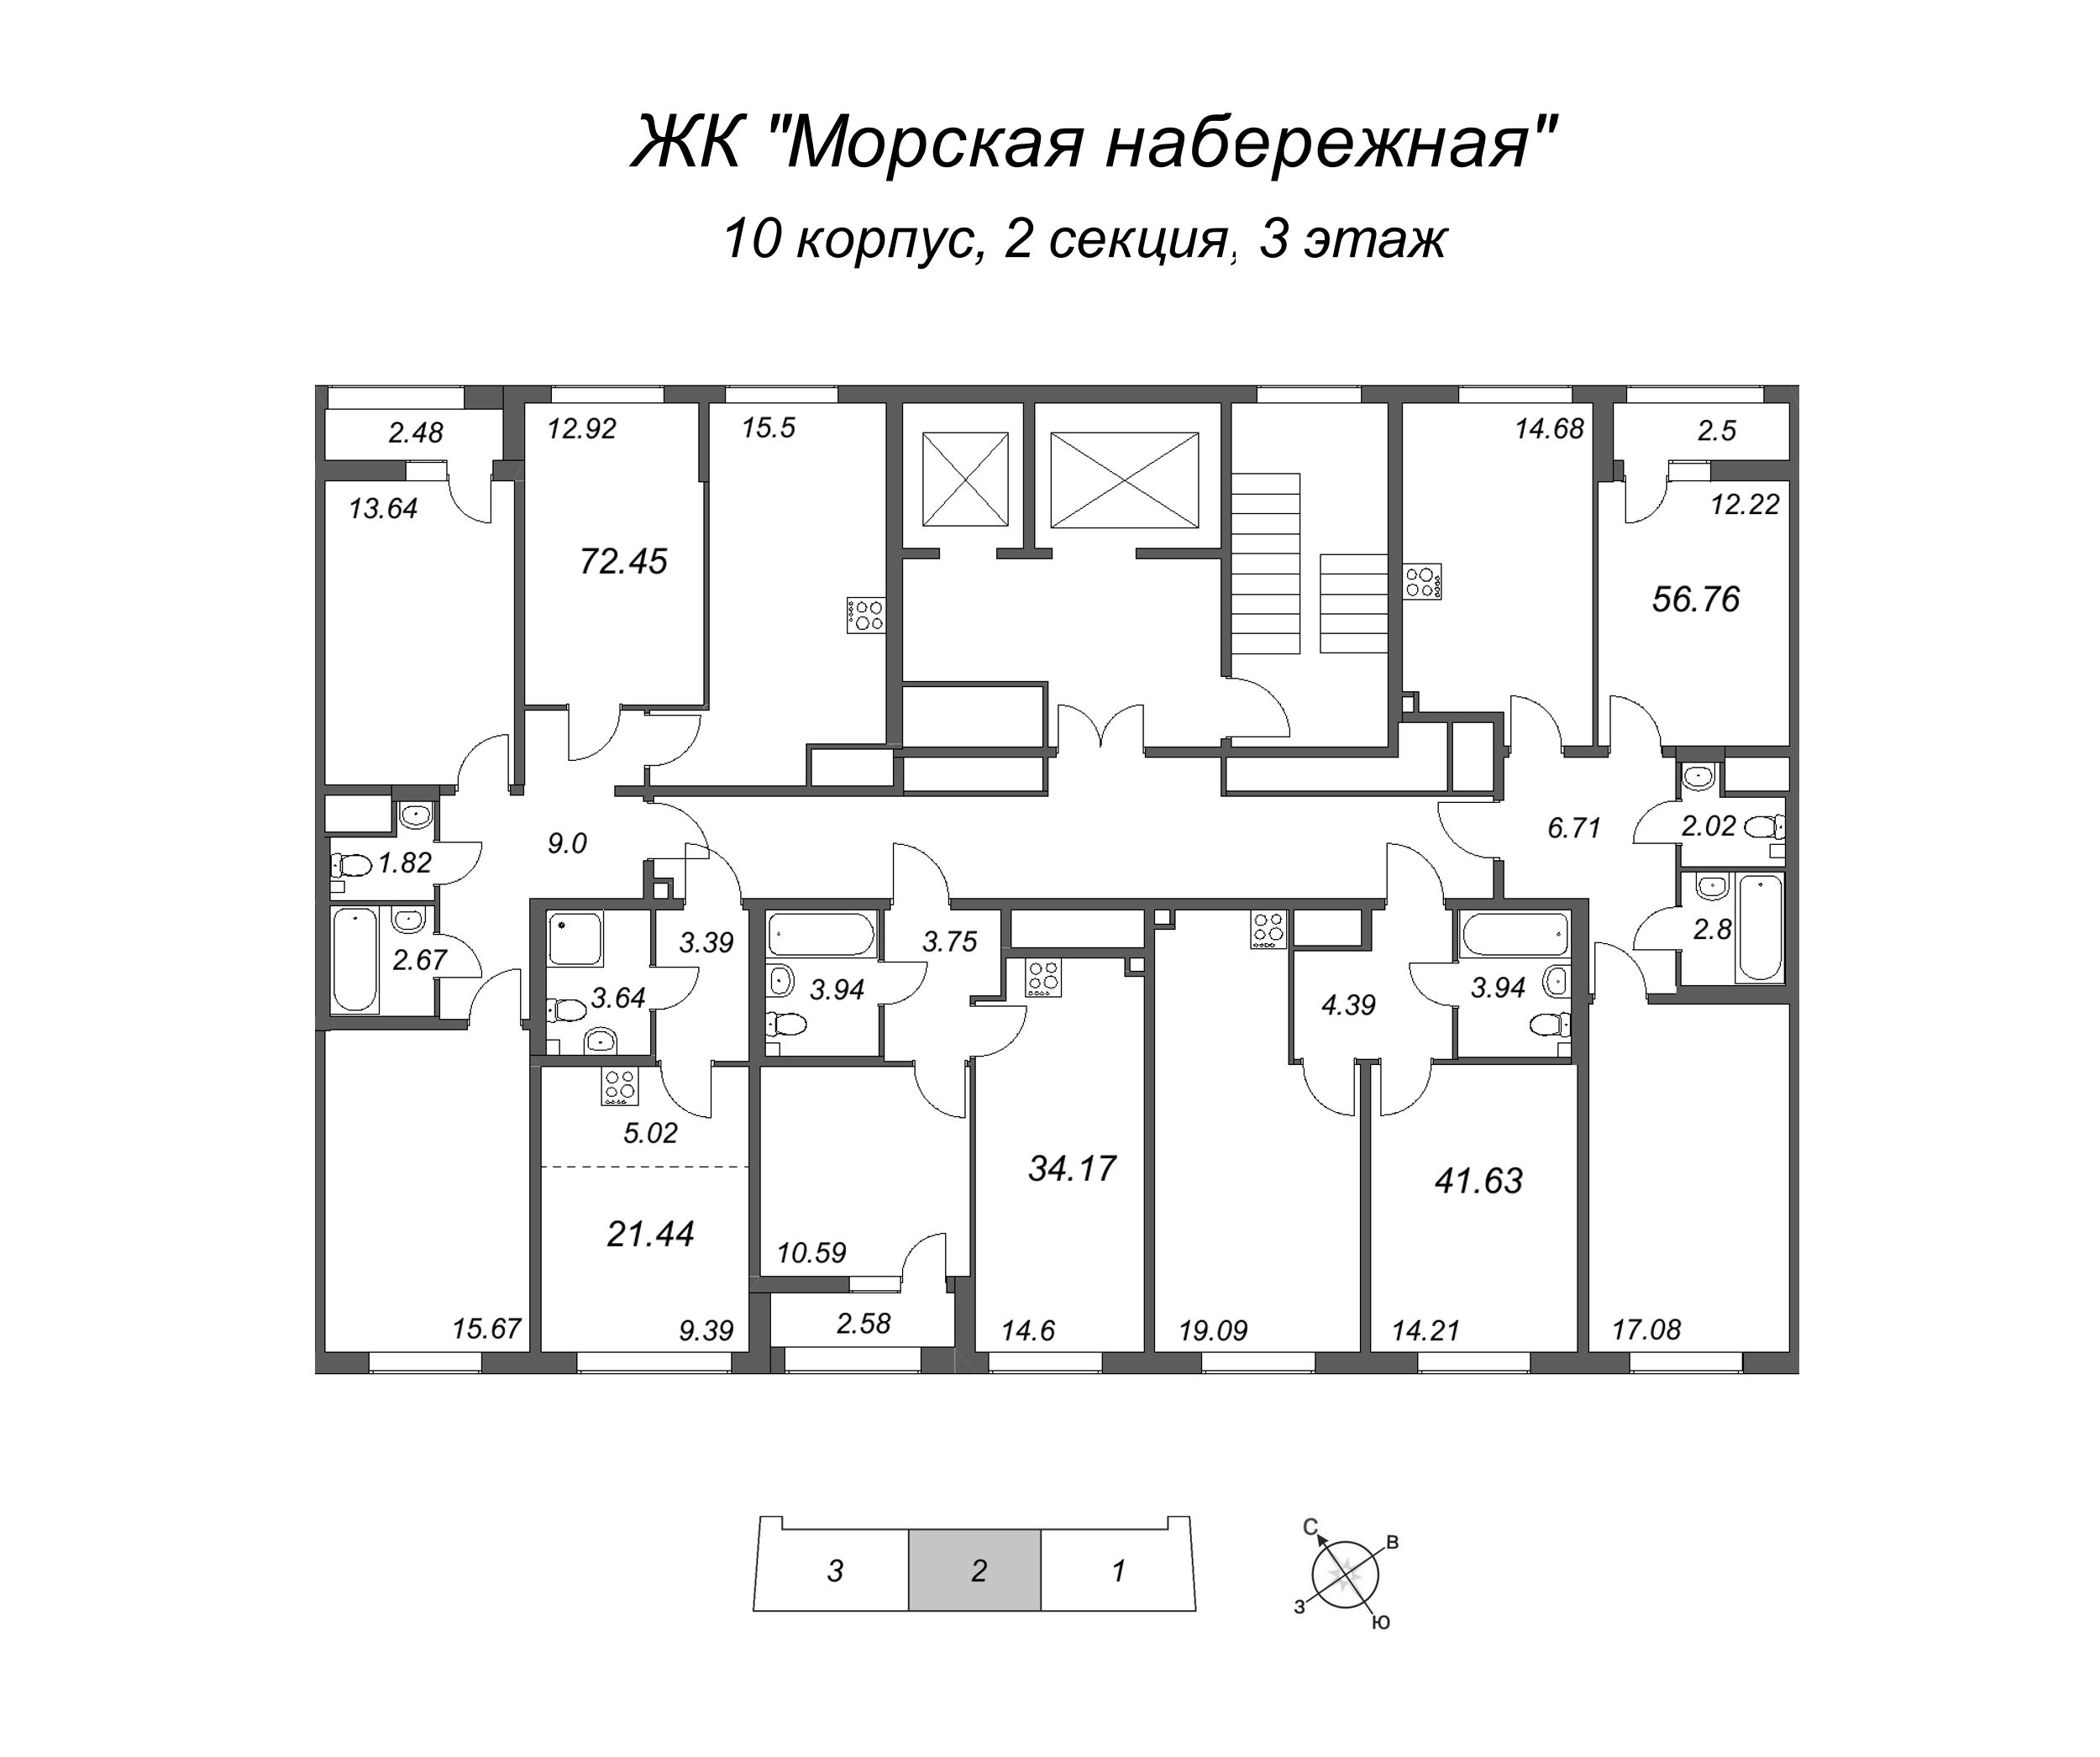 4-комнатная (Евро) квартира, 72.45 м² - планировка этажа